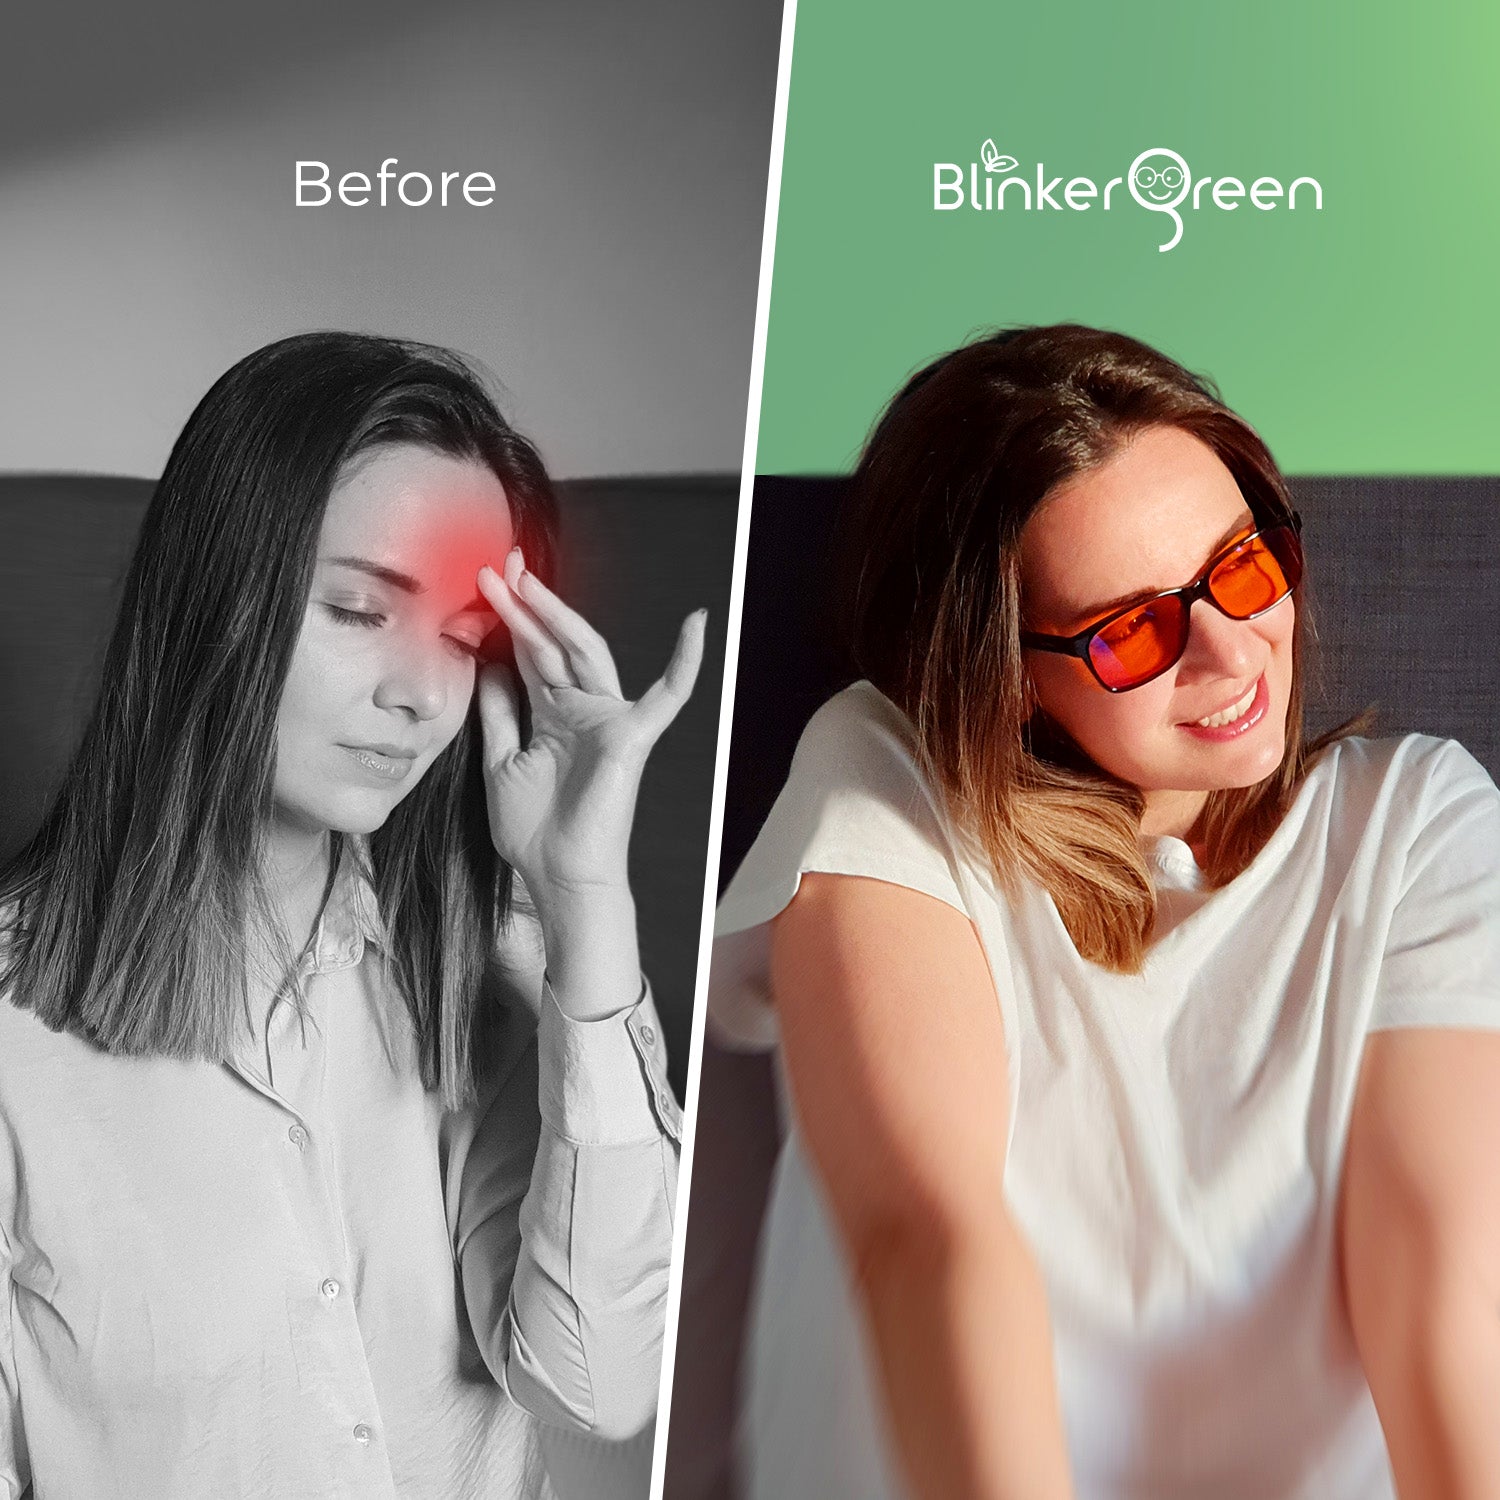 BlinkerGreen Computer & Gaming Glasses with Blue Light Filter